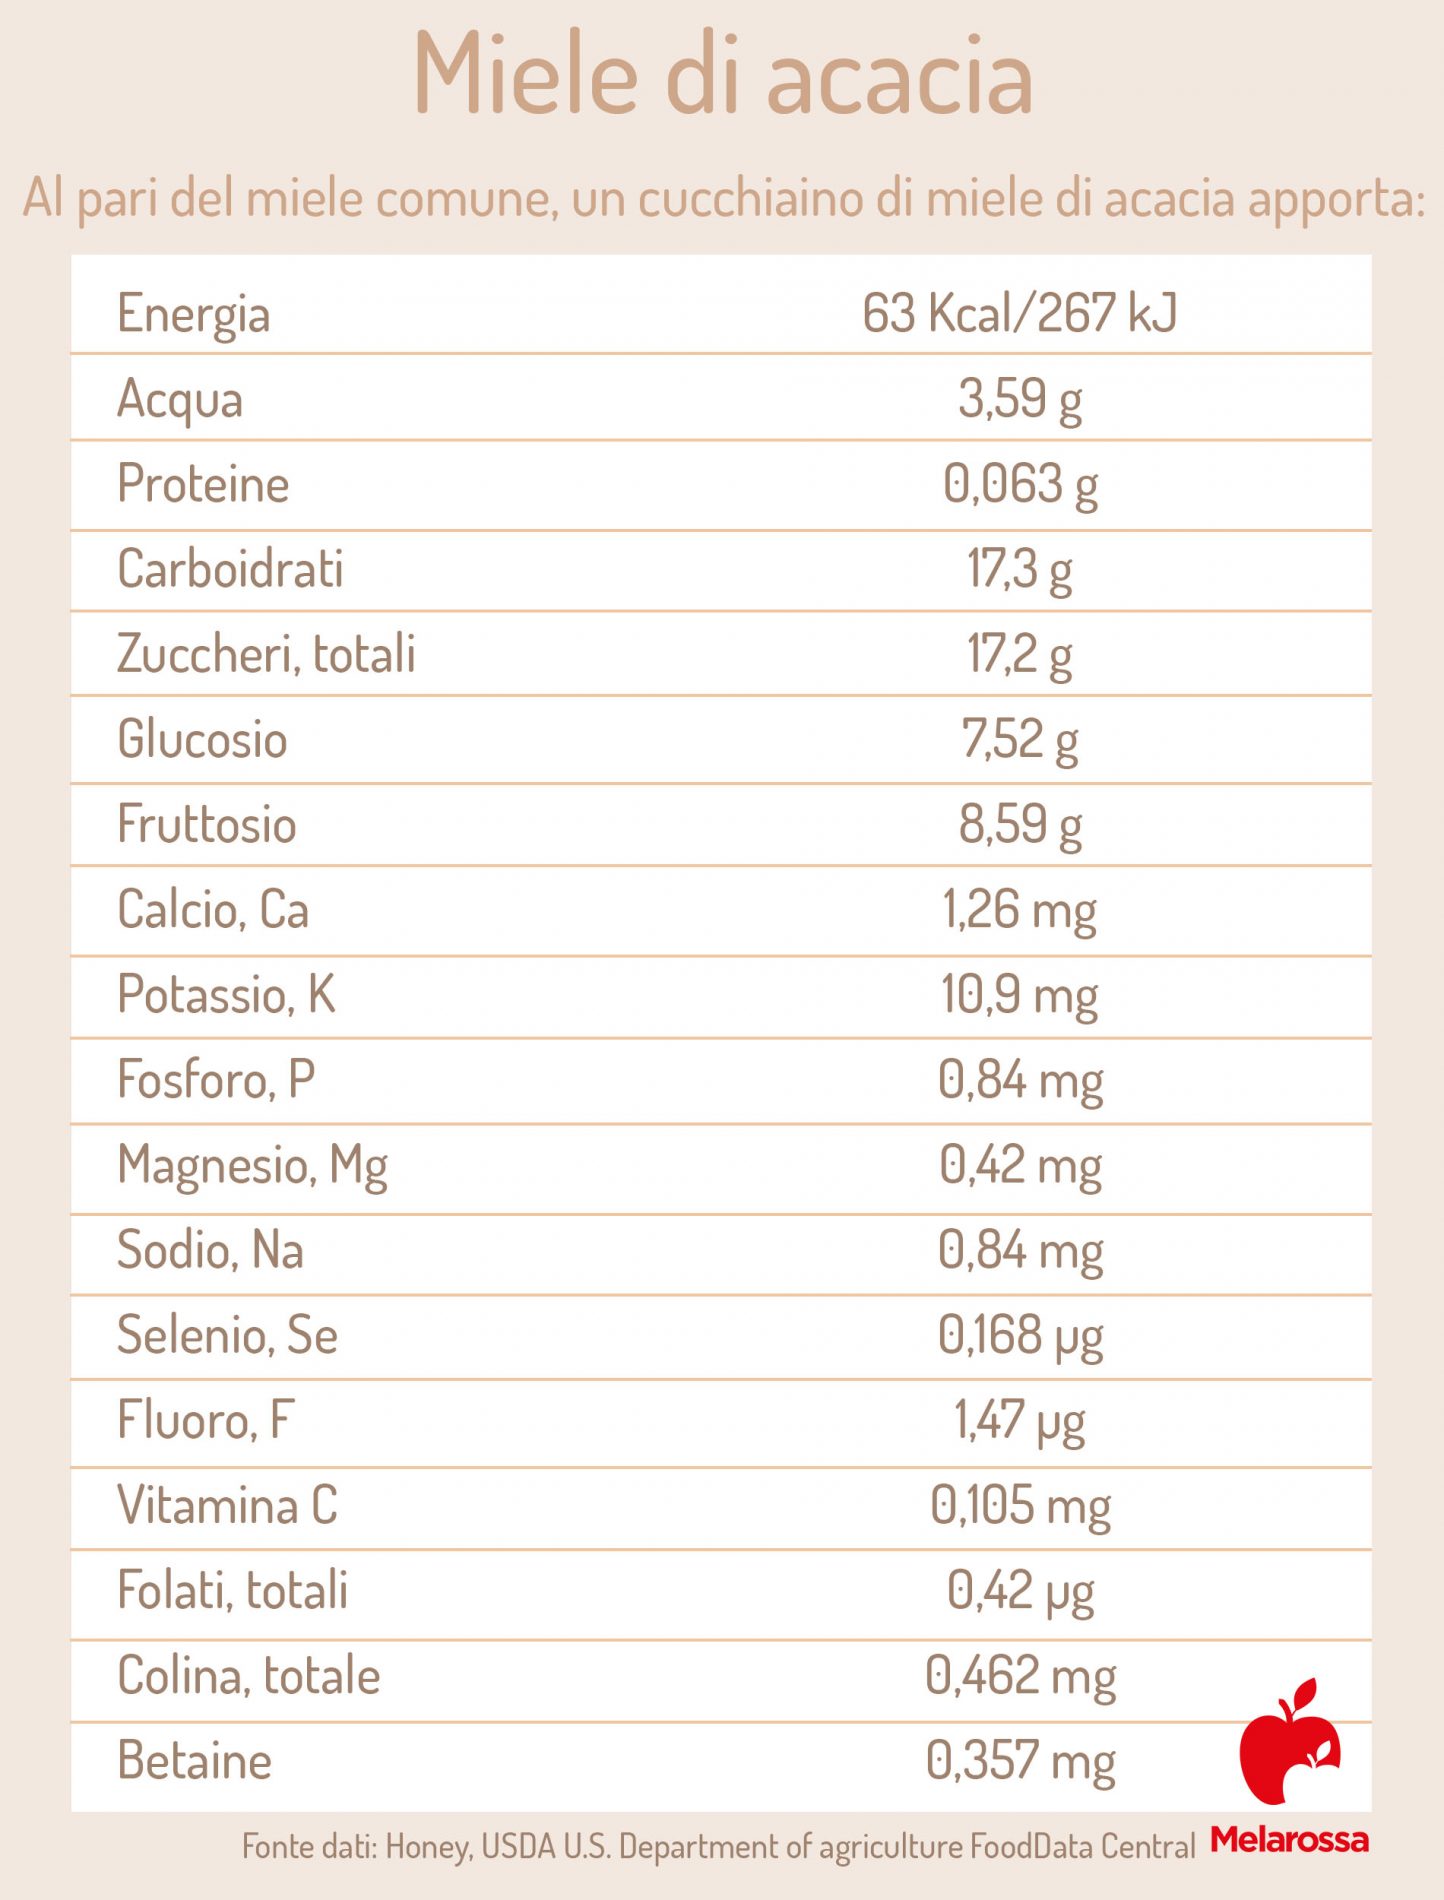 miele di acacia: valori nutrizionali 